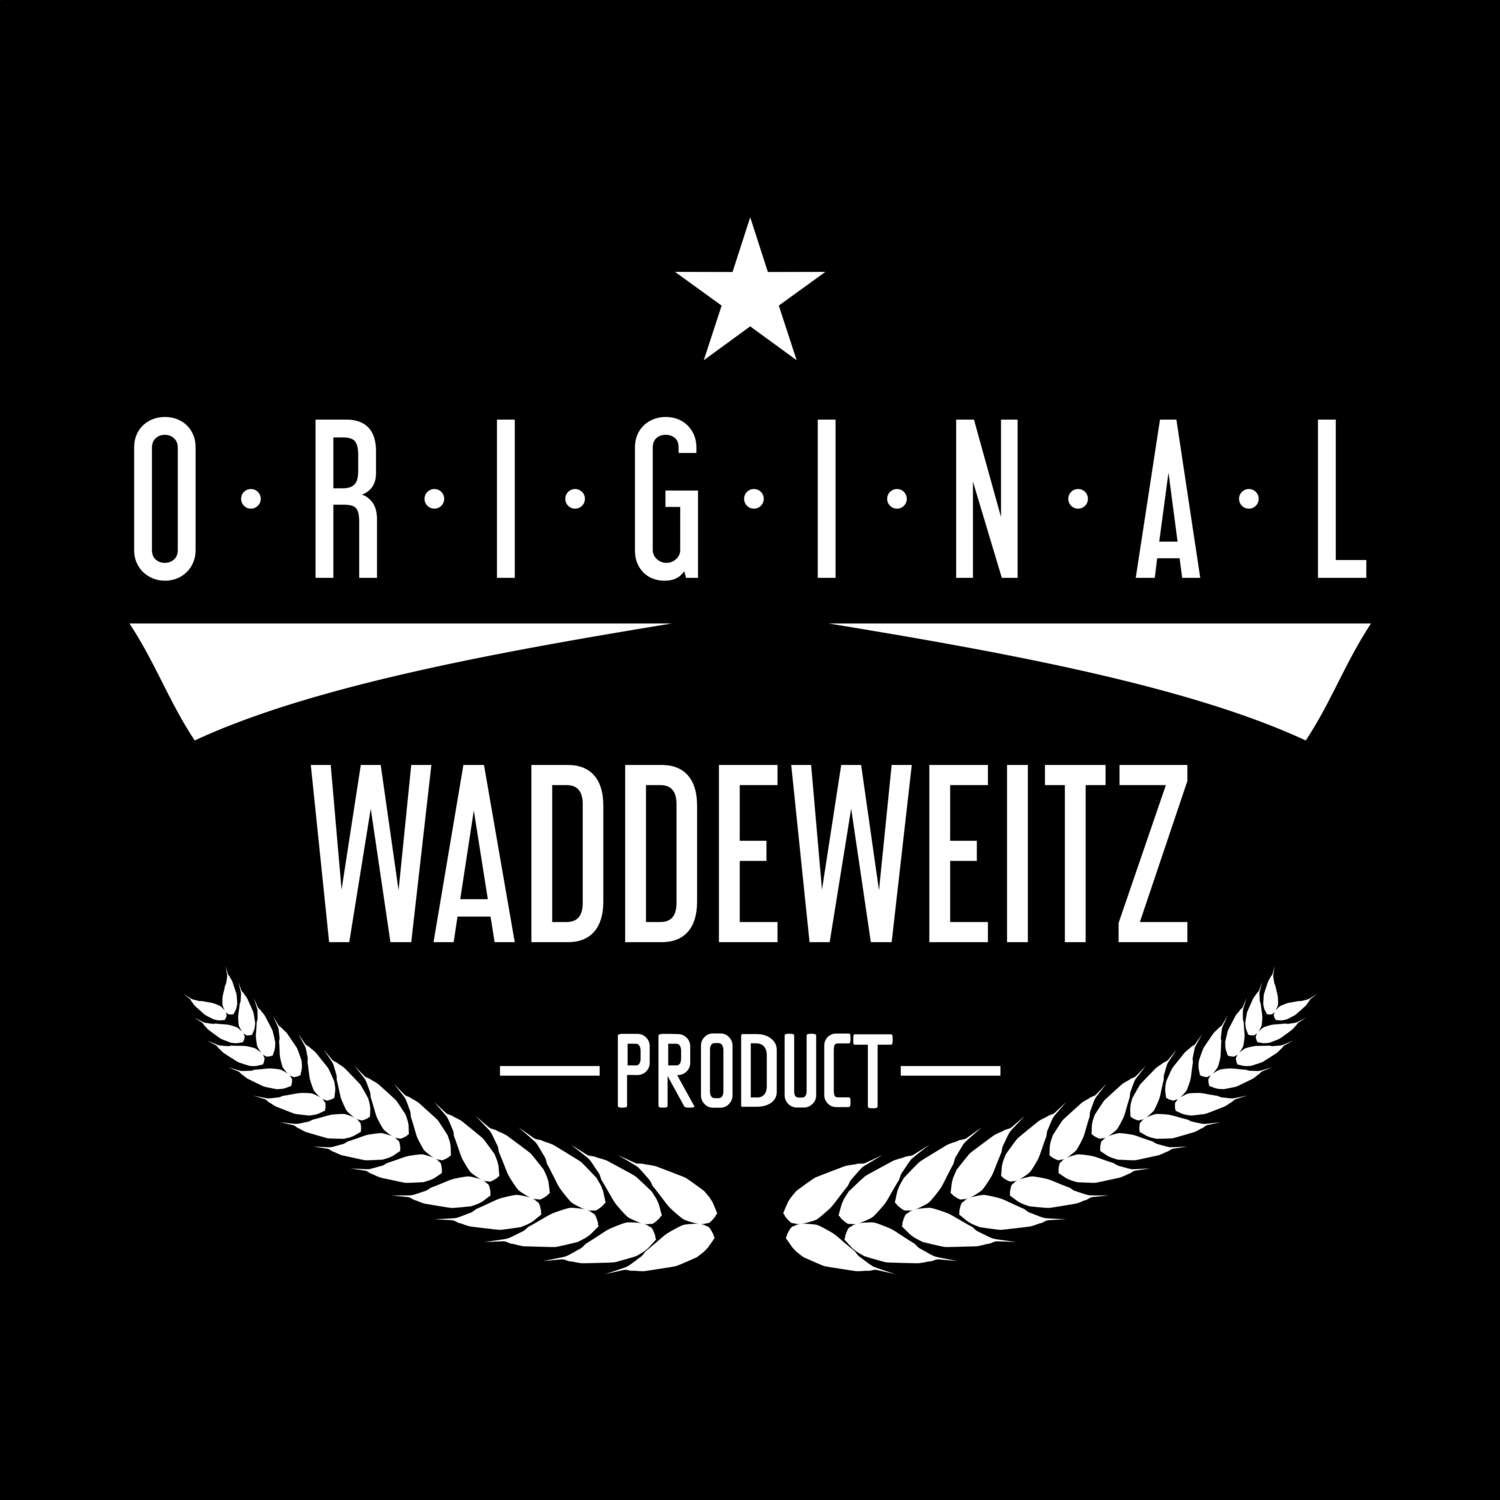 Waddeweitz T-Shirt »Original Product«